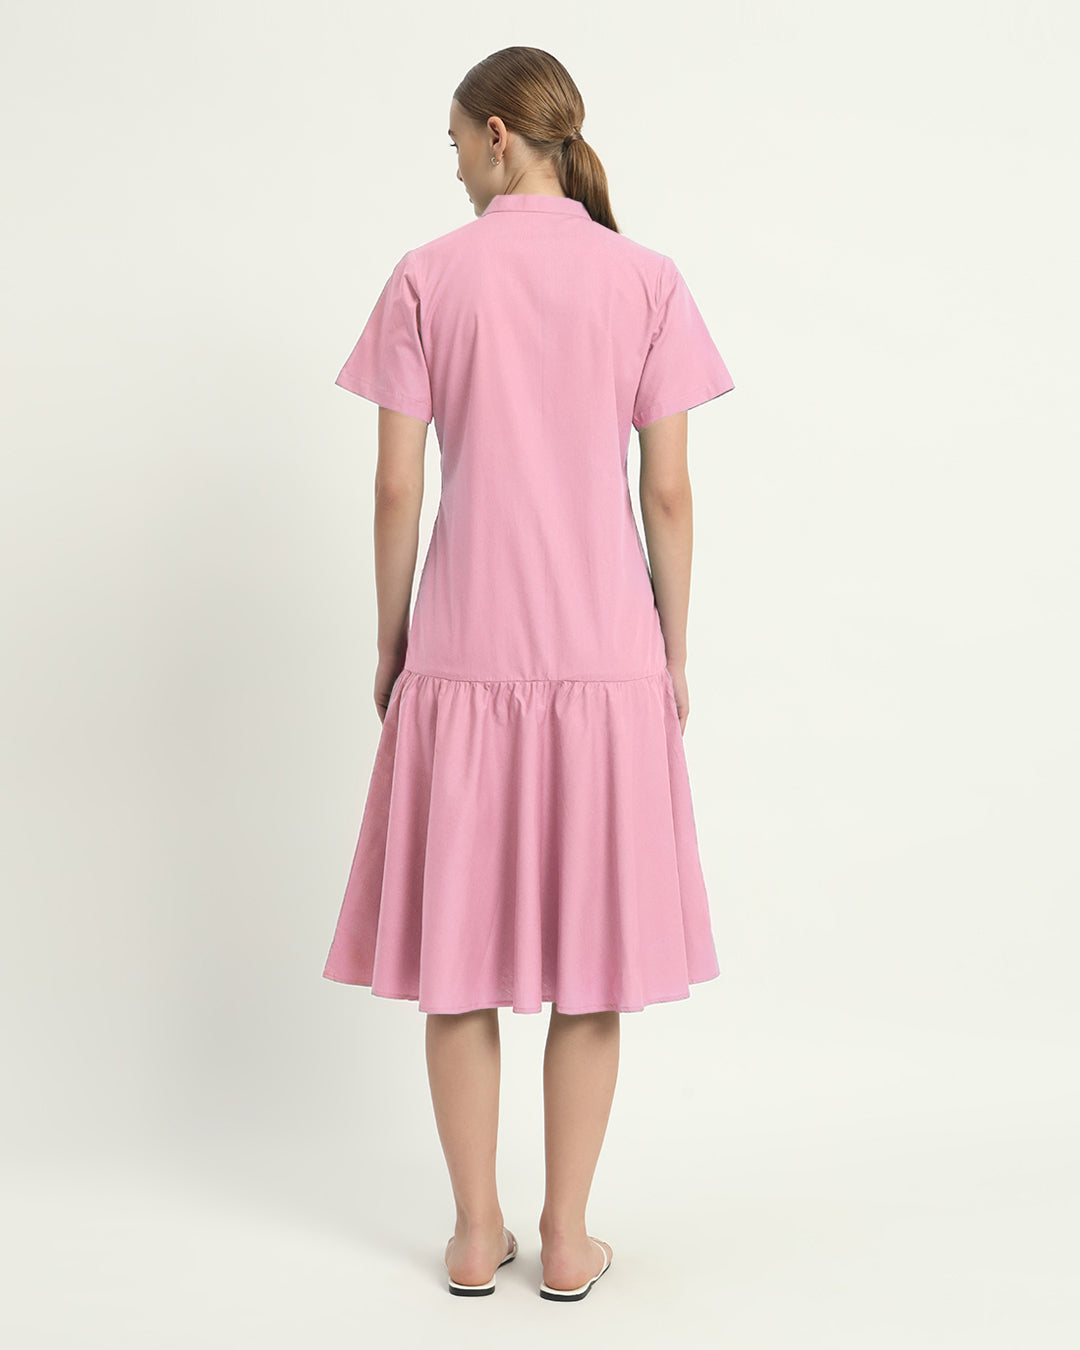 The Melrose Fondant Pink Cotton Dress